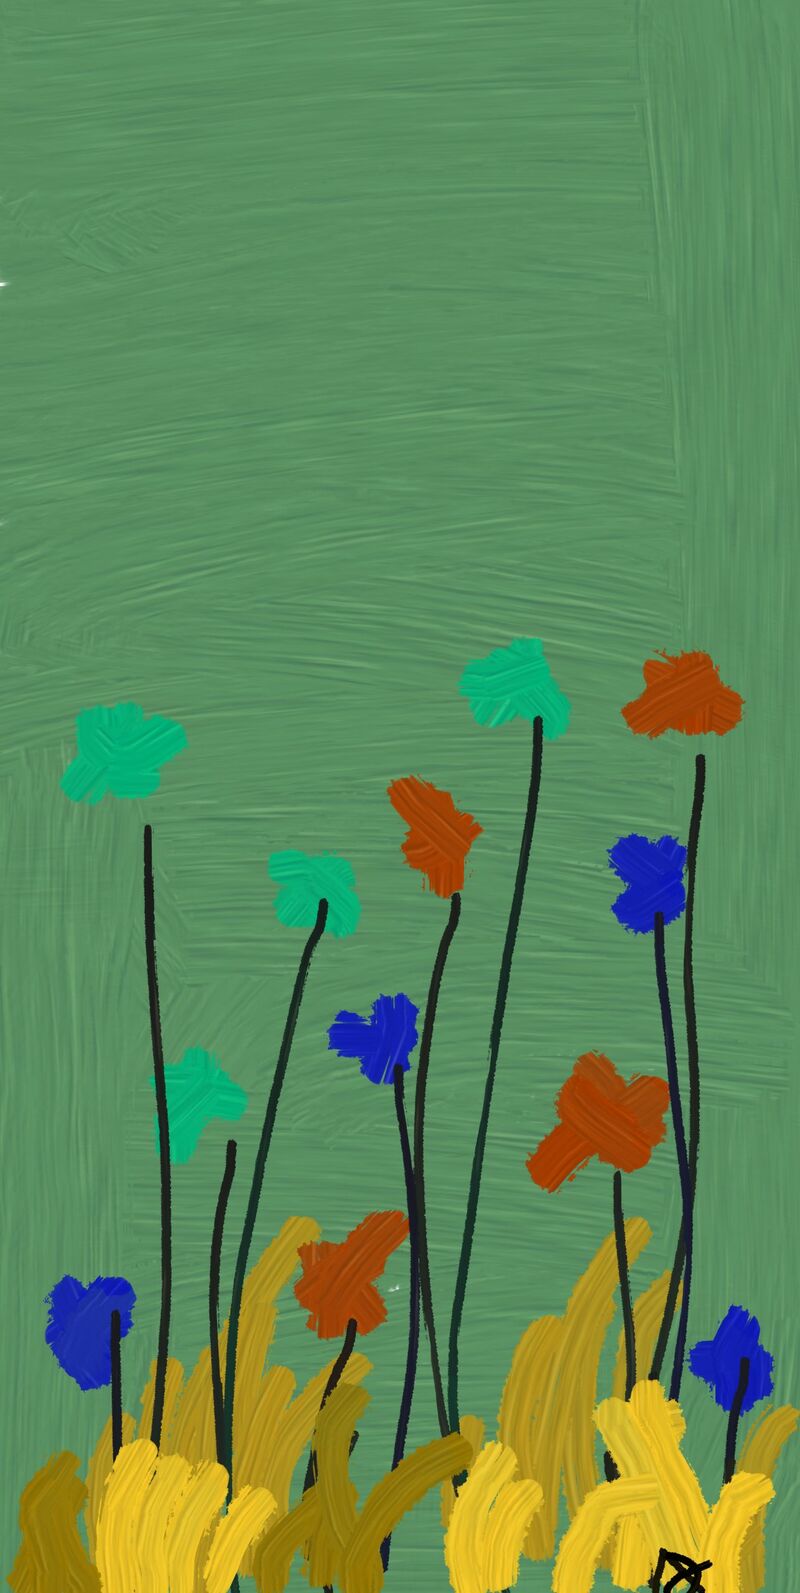 Flowers, Ubah & Bloemen - a Digital Art by NaJa